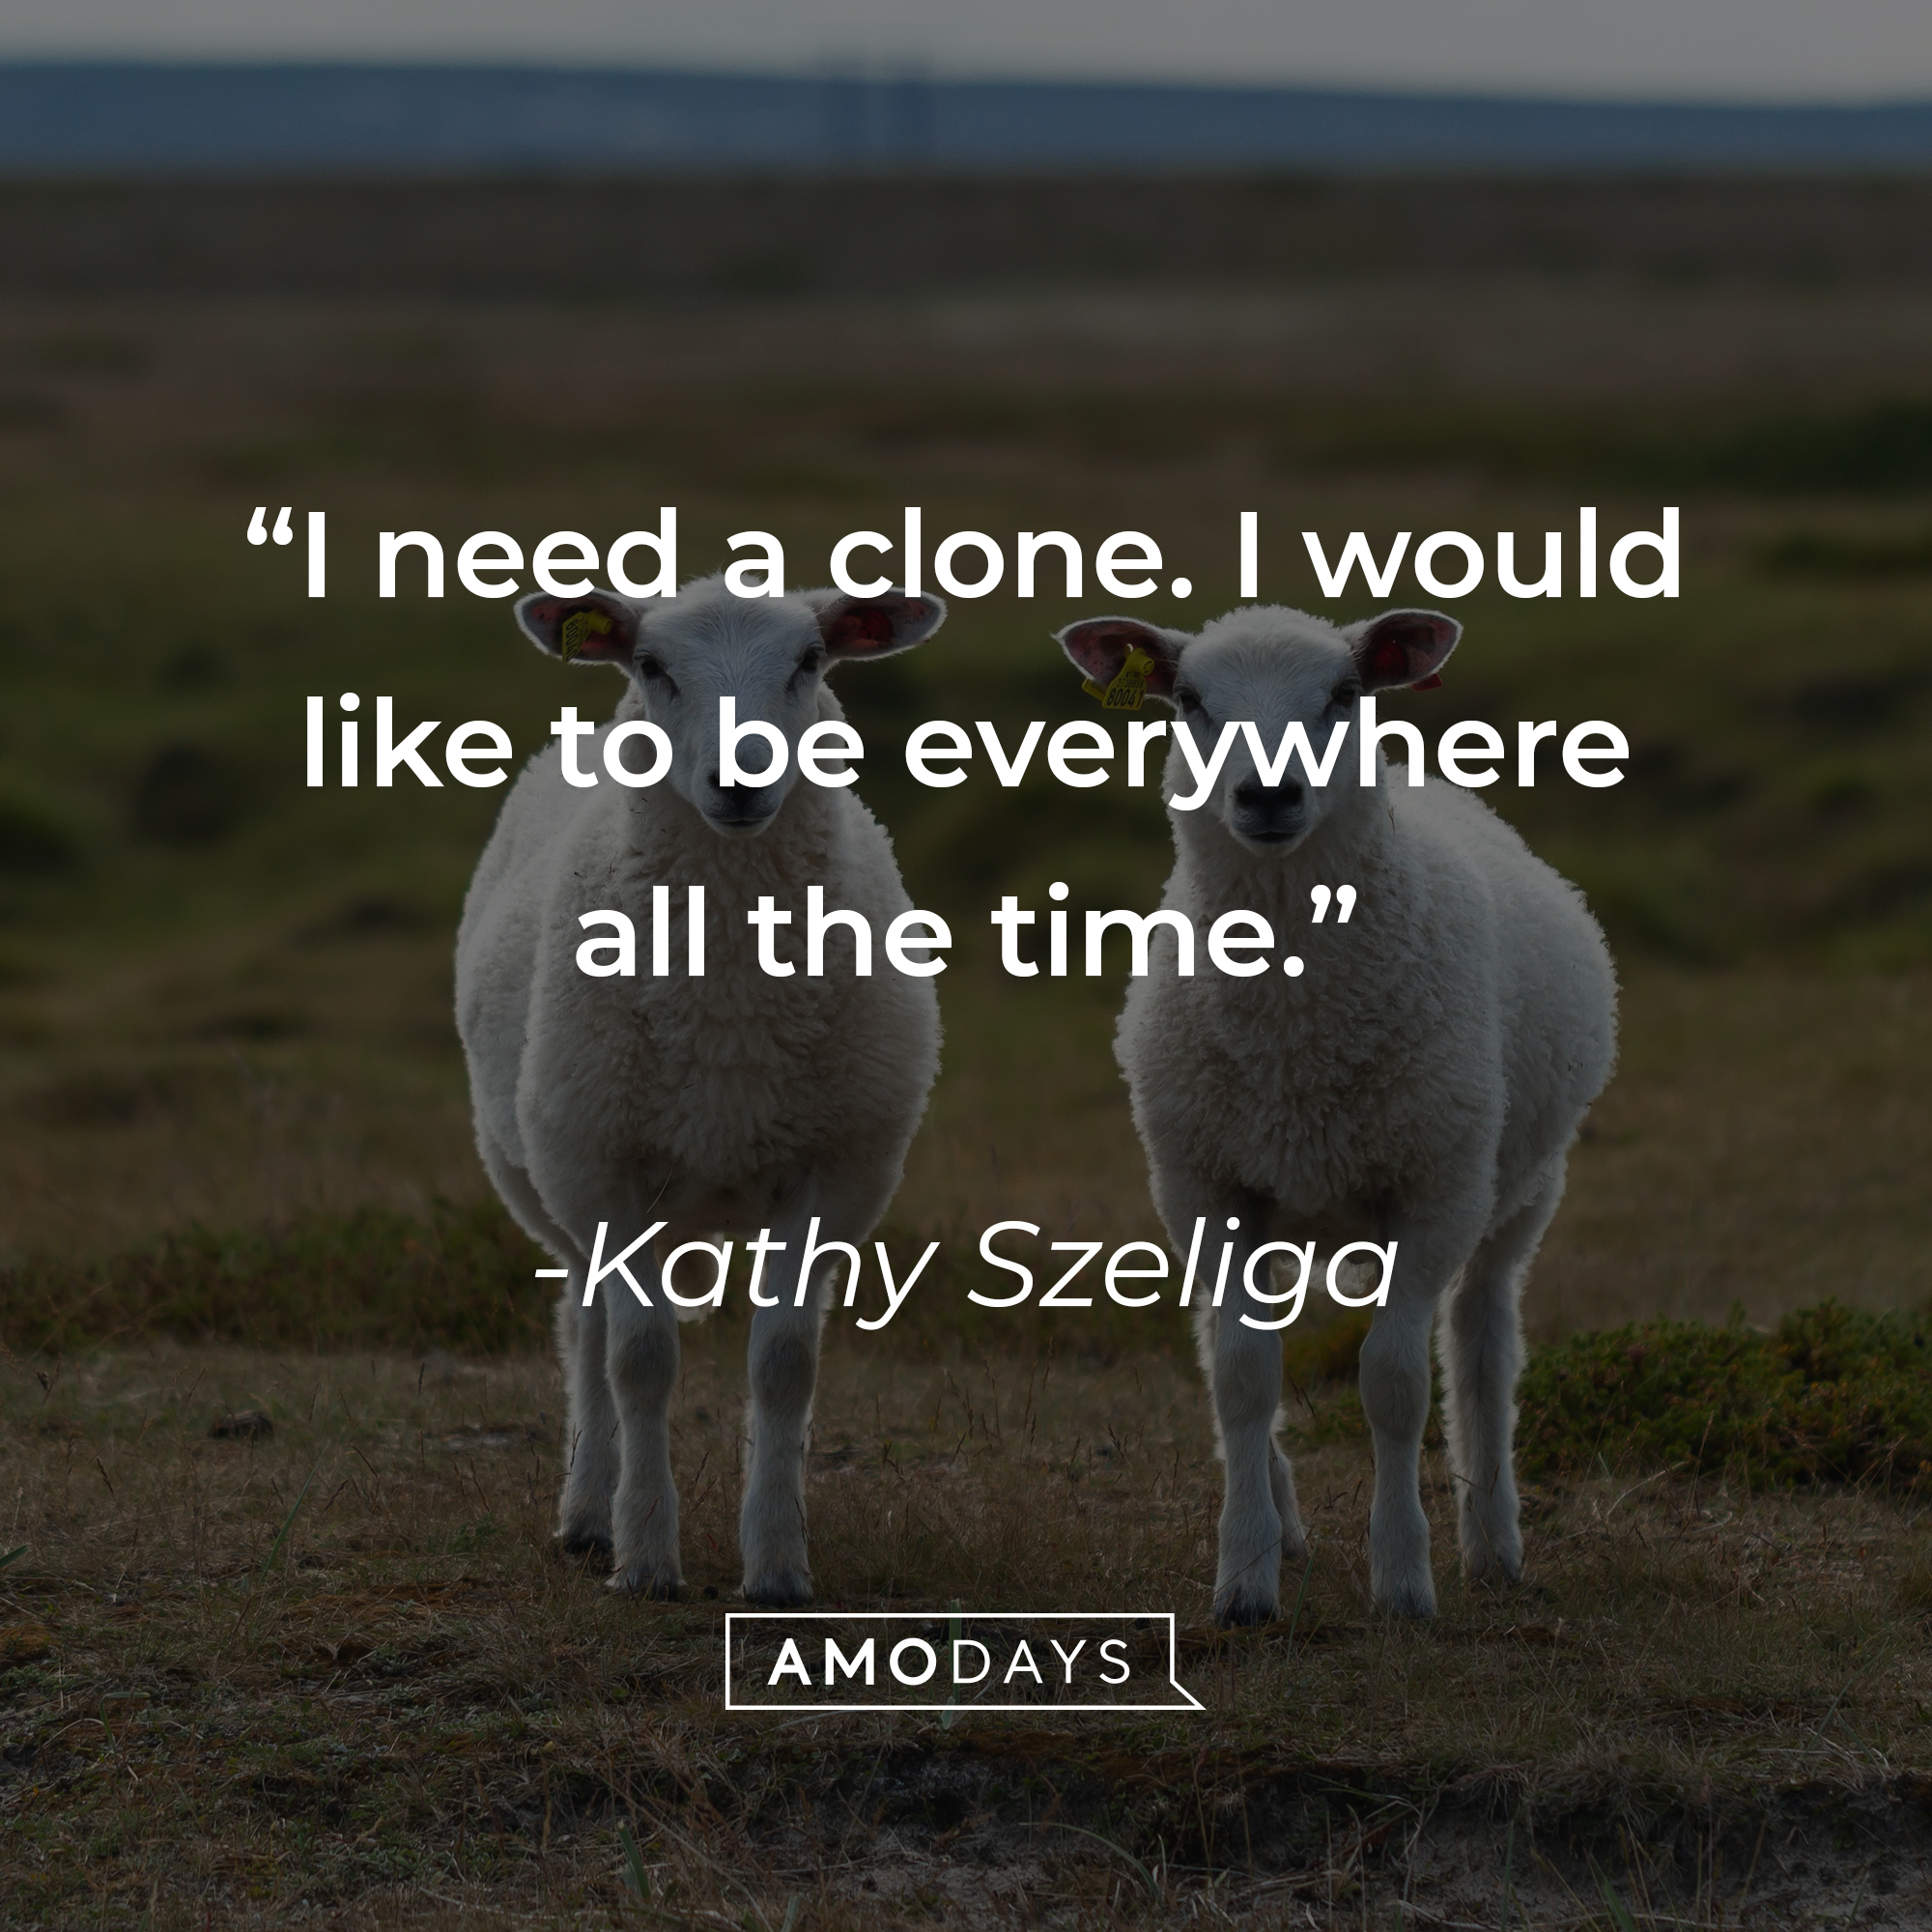 Kathy Szeliga's quote, "I need a clone. I would like to be everywhere all the time." | Image: Unsplash.com